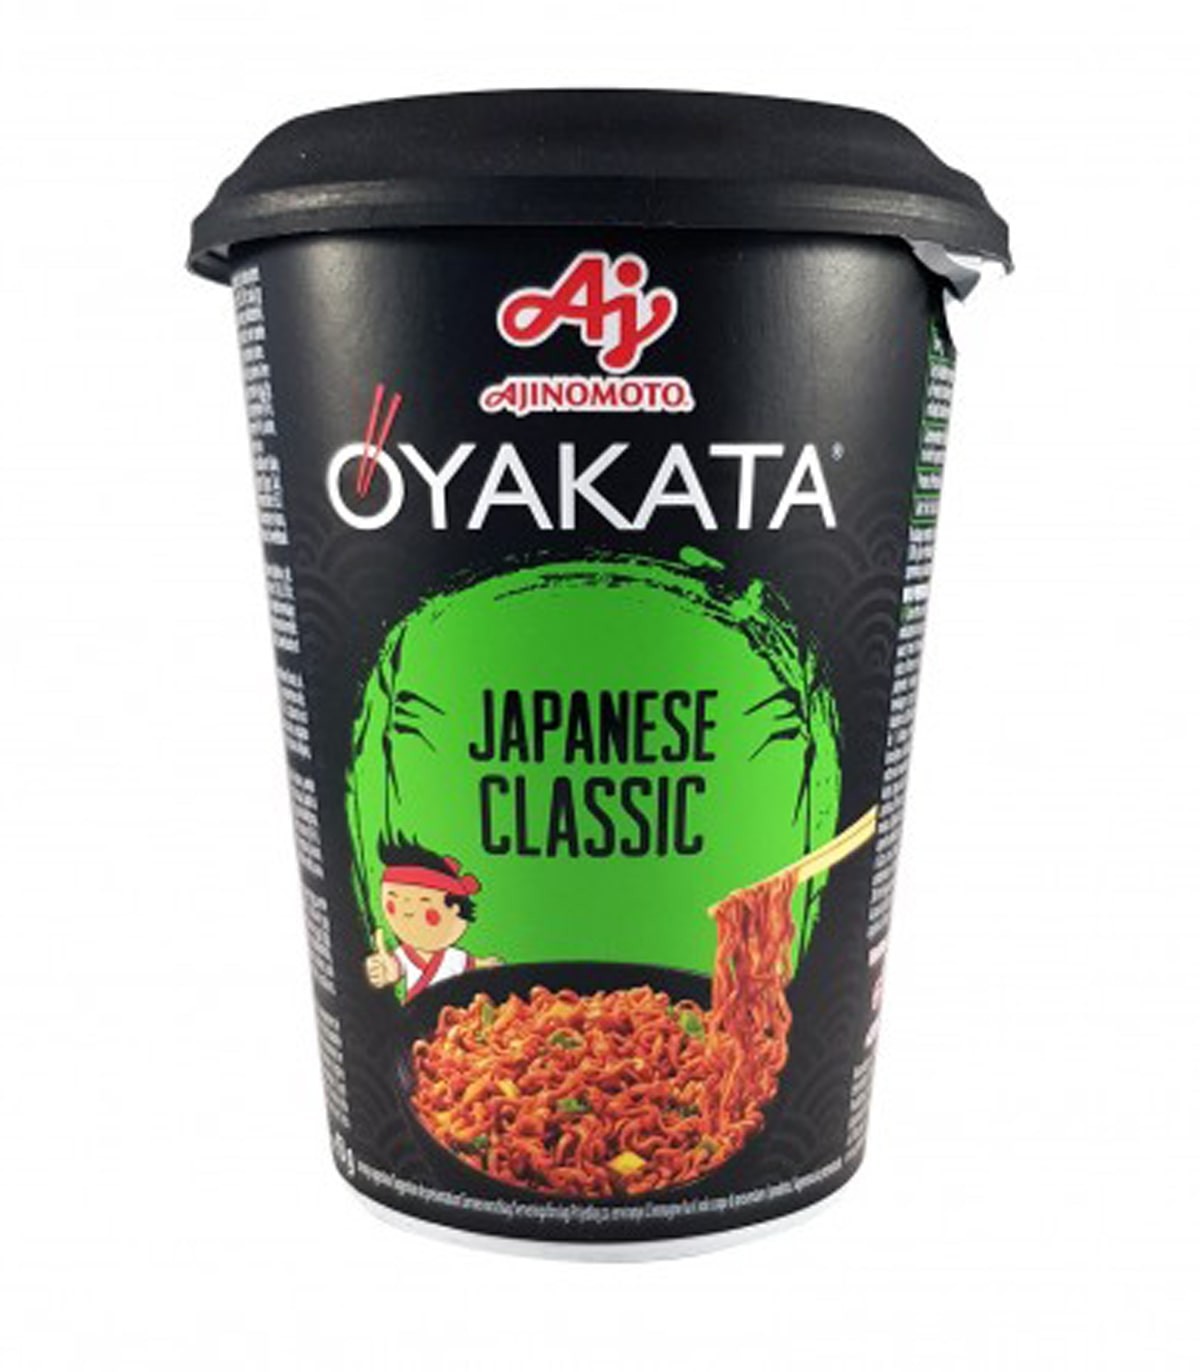 Oyakata Ramen classici cup - 93g